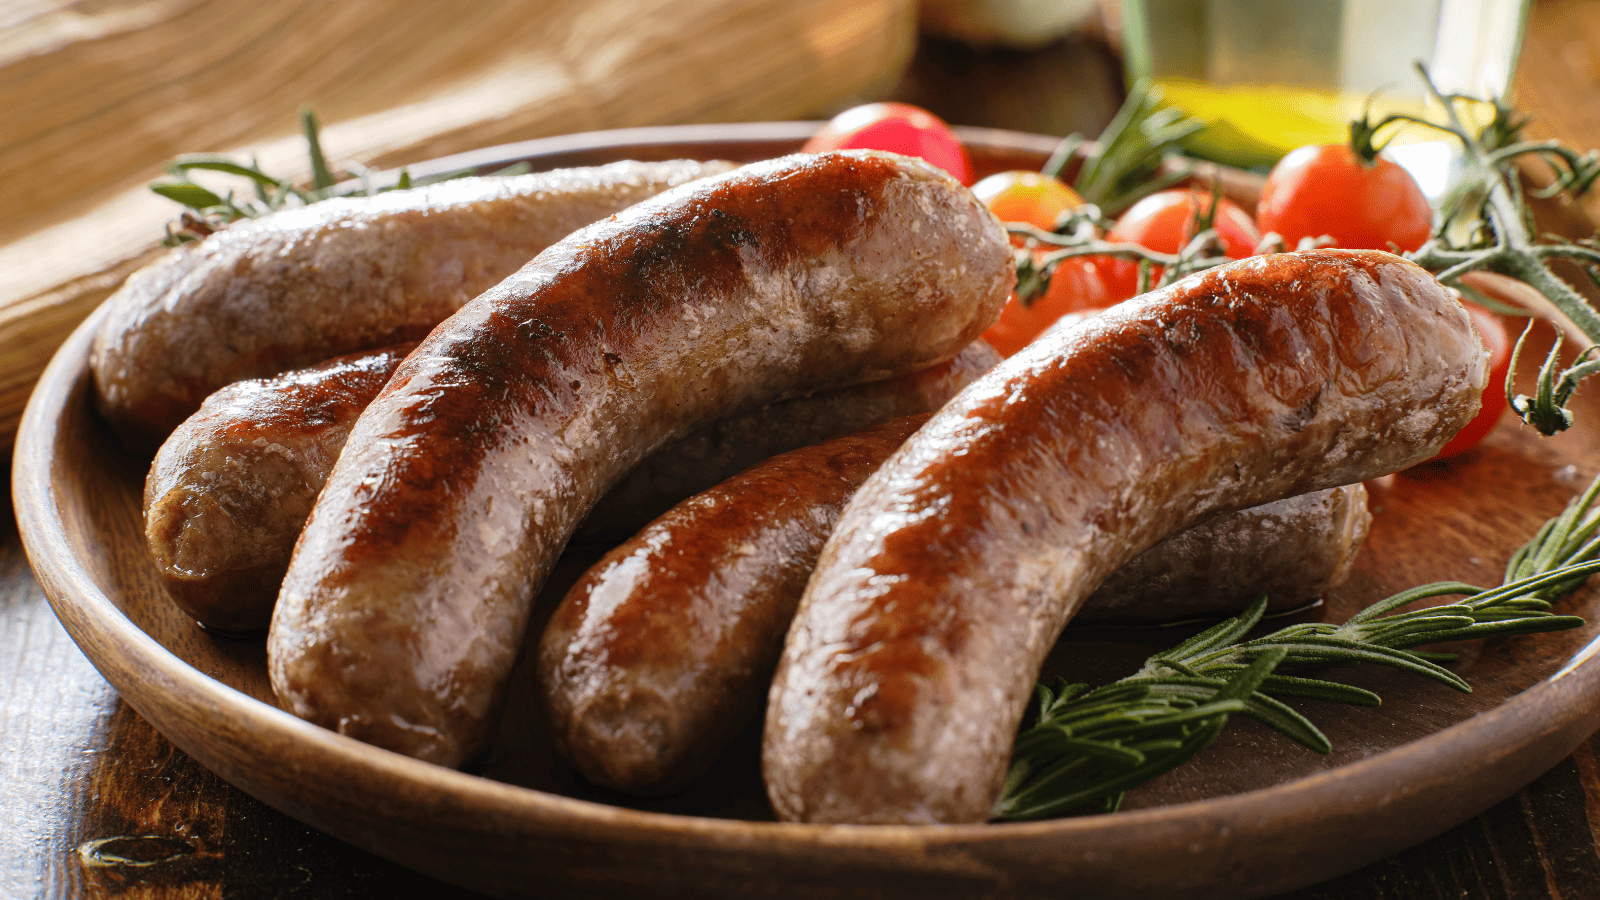 Bratwurst – A German Sausage